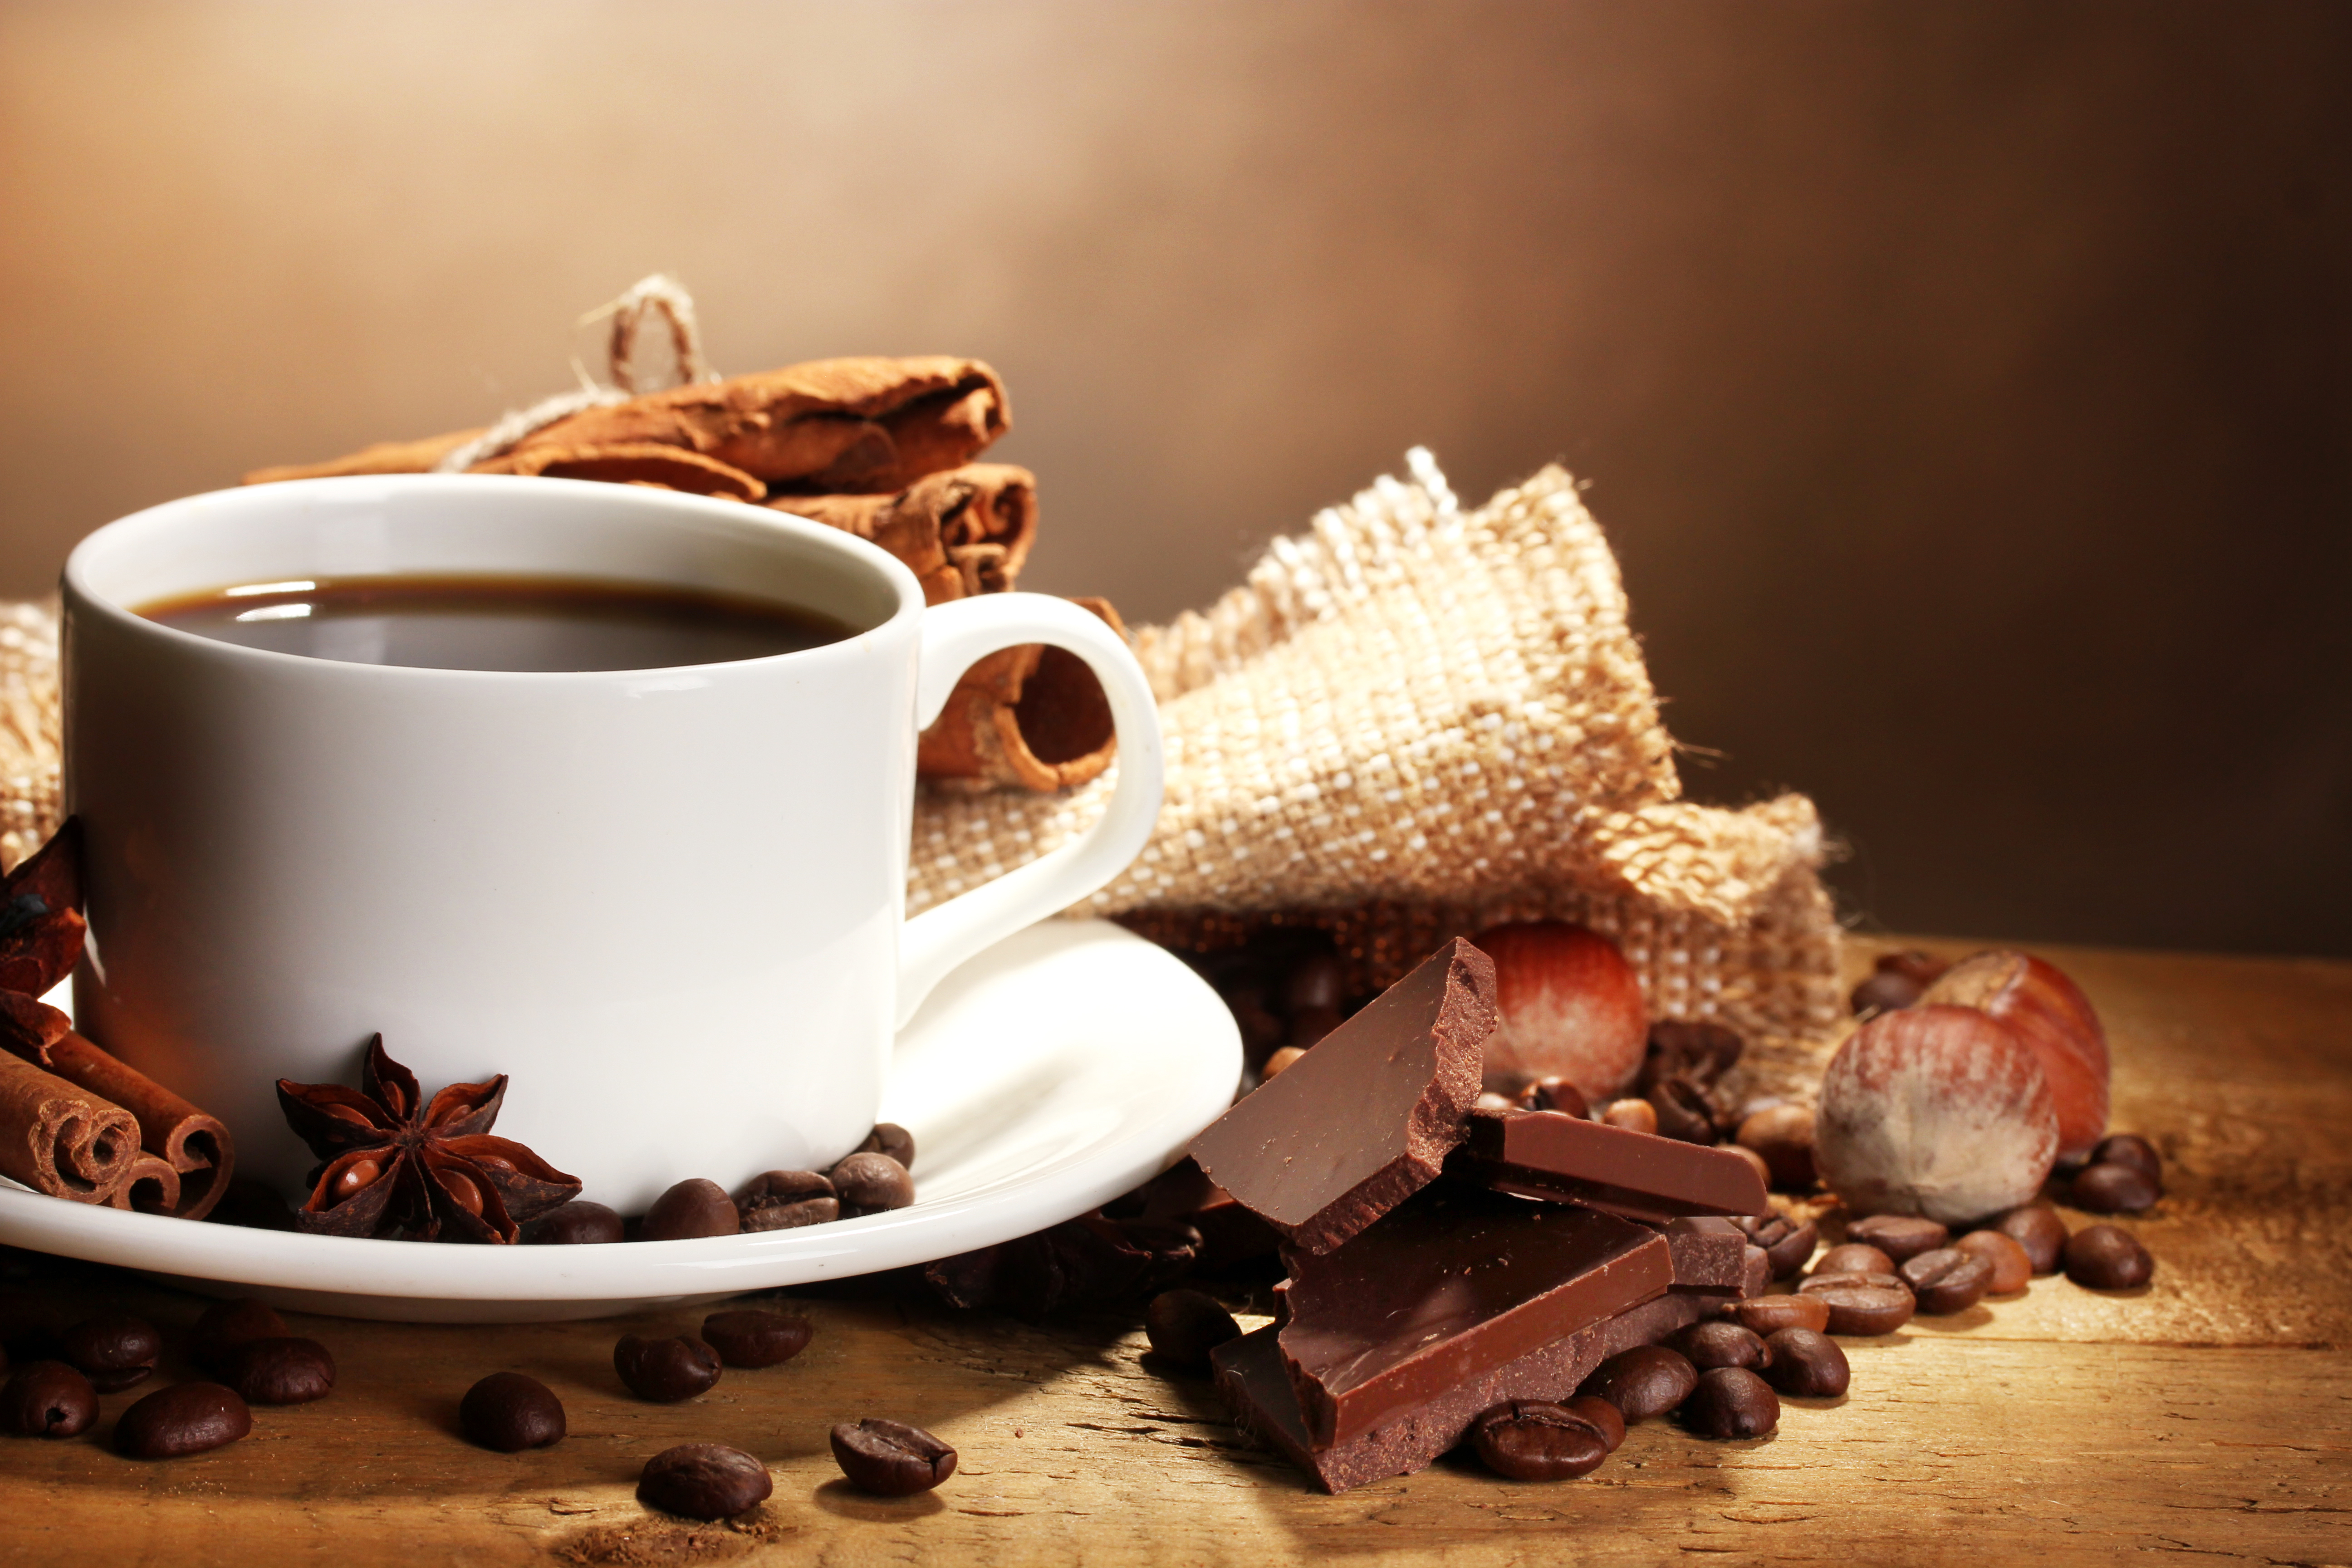 Coffee i chocolate. Кофе и шоколад. Чашка кофе. Чашка кофе и шоколад. Чашка кофе с конфетами.